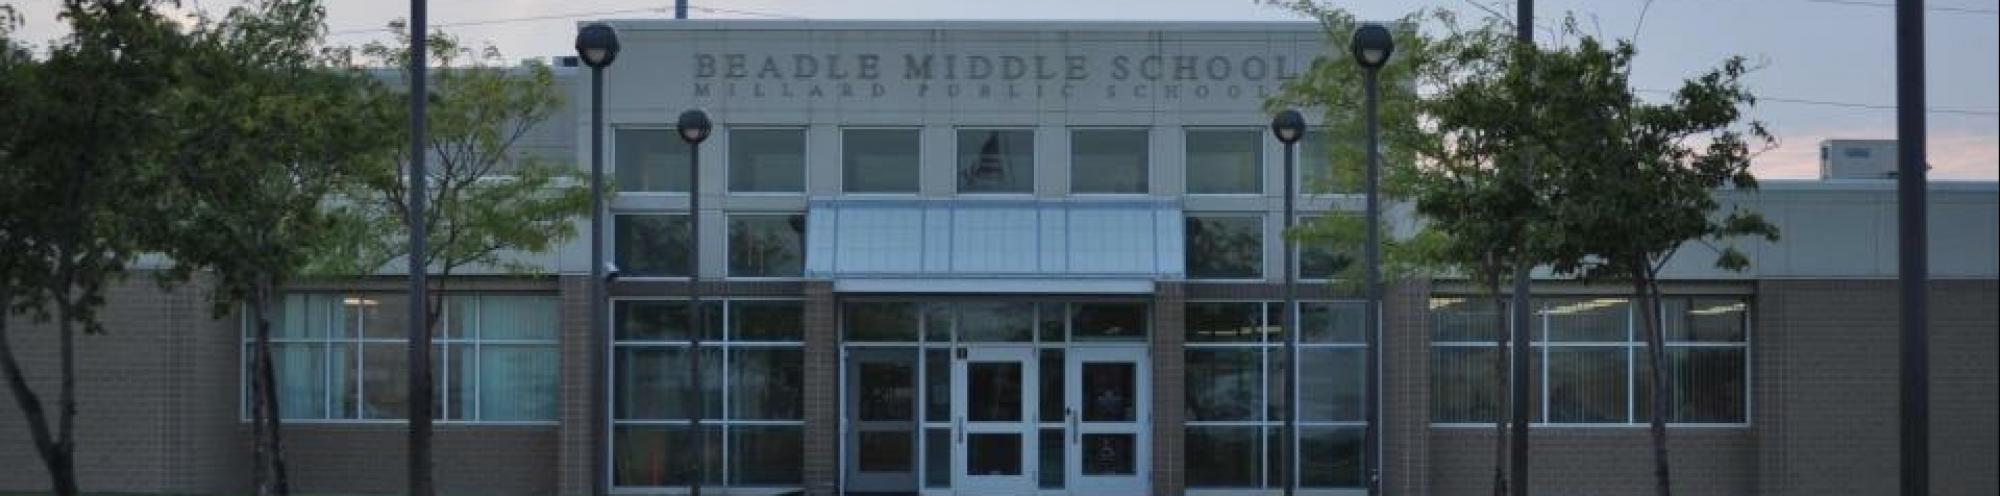 Image of Beadle Middle School